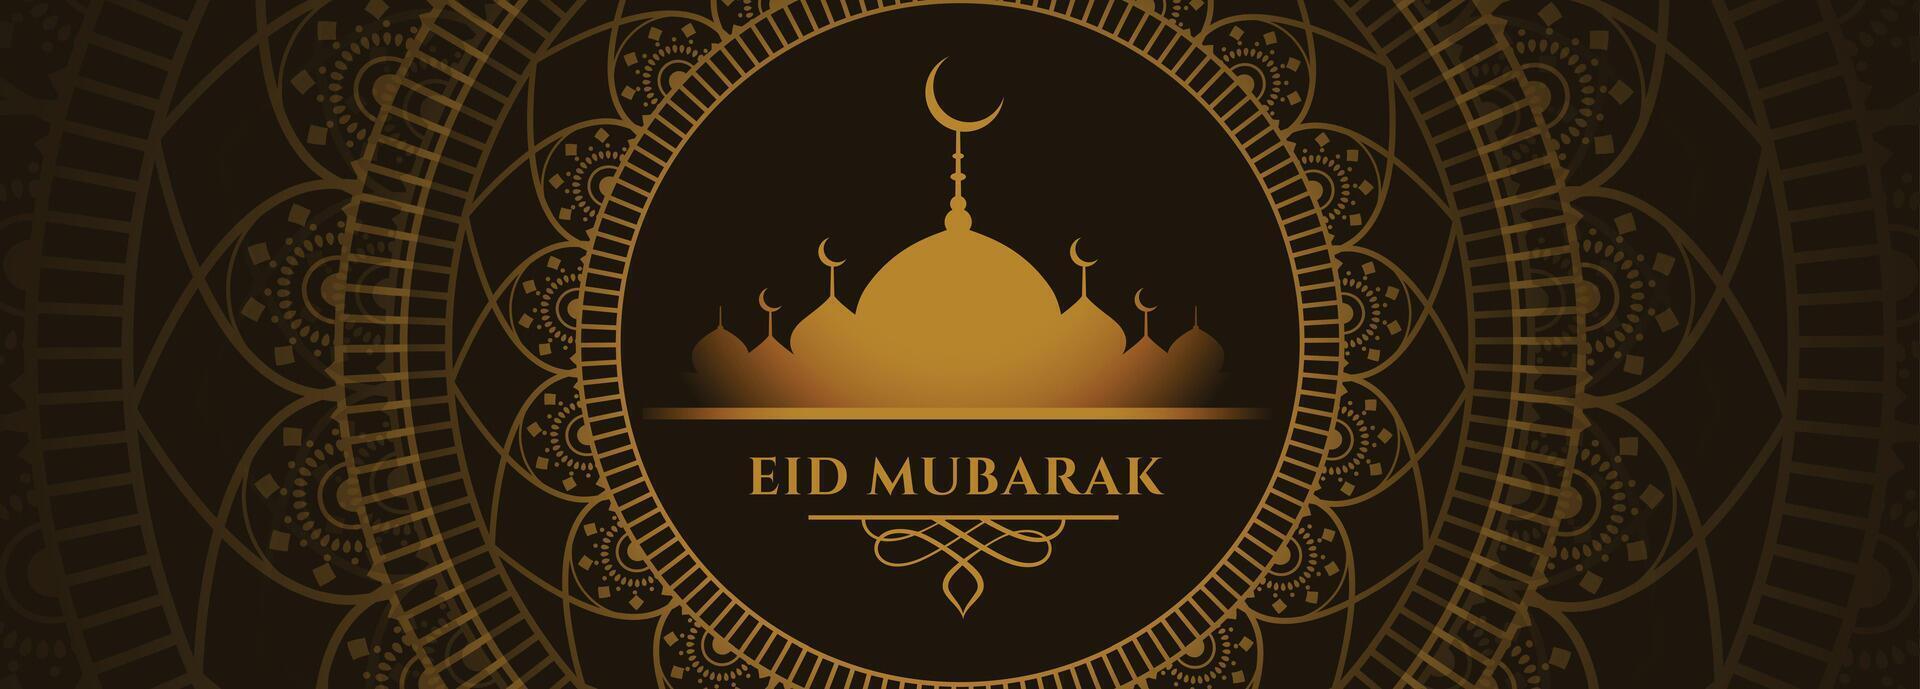 decorative eid mubarak mandala style banner design vector